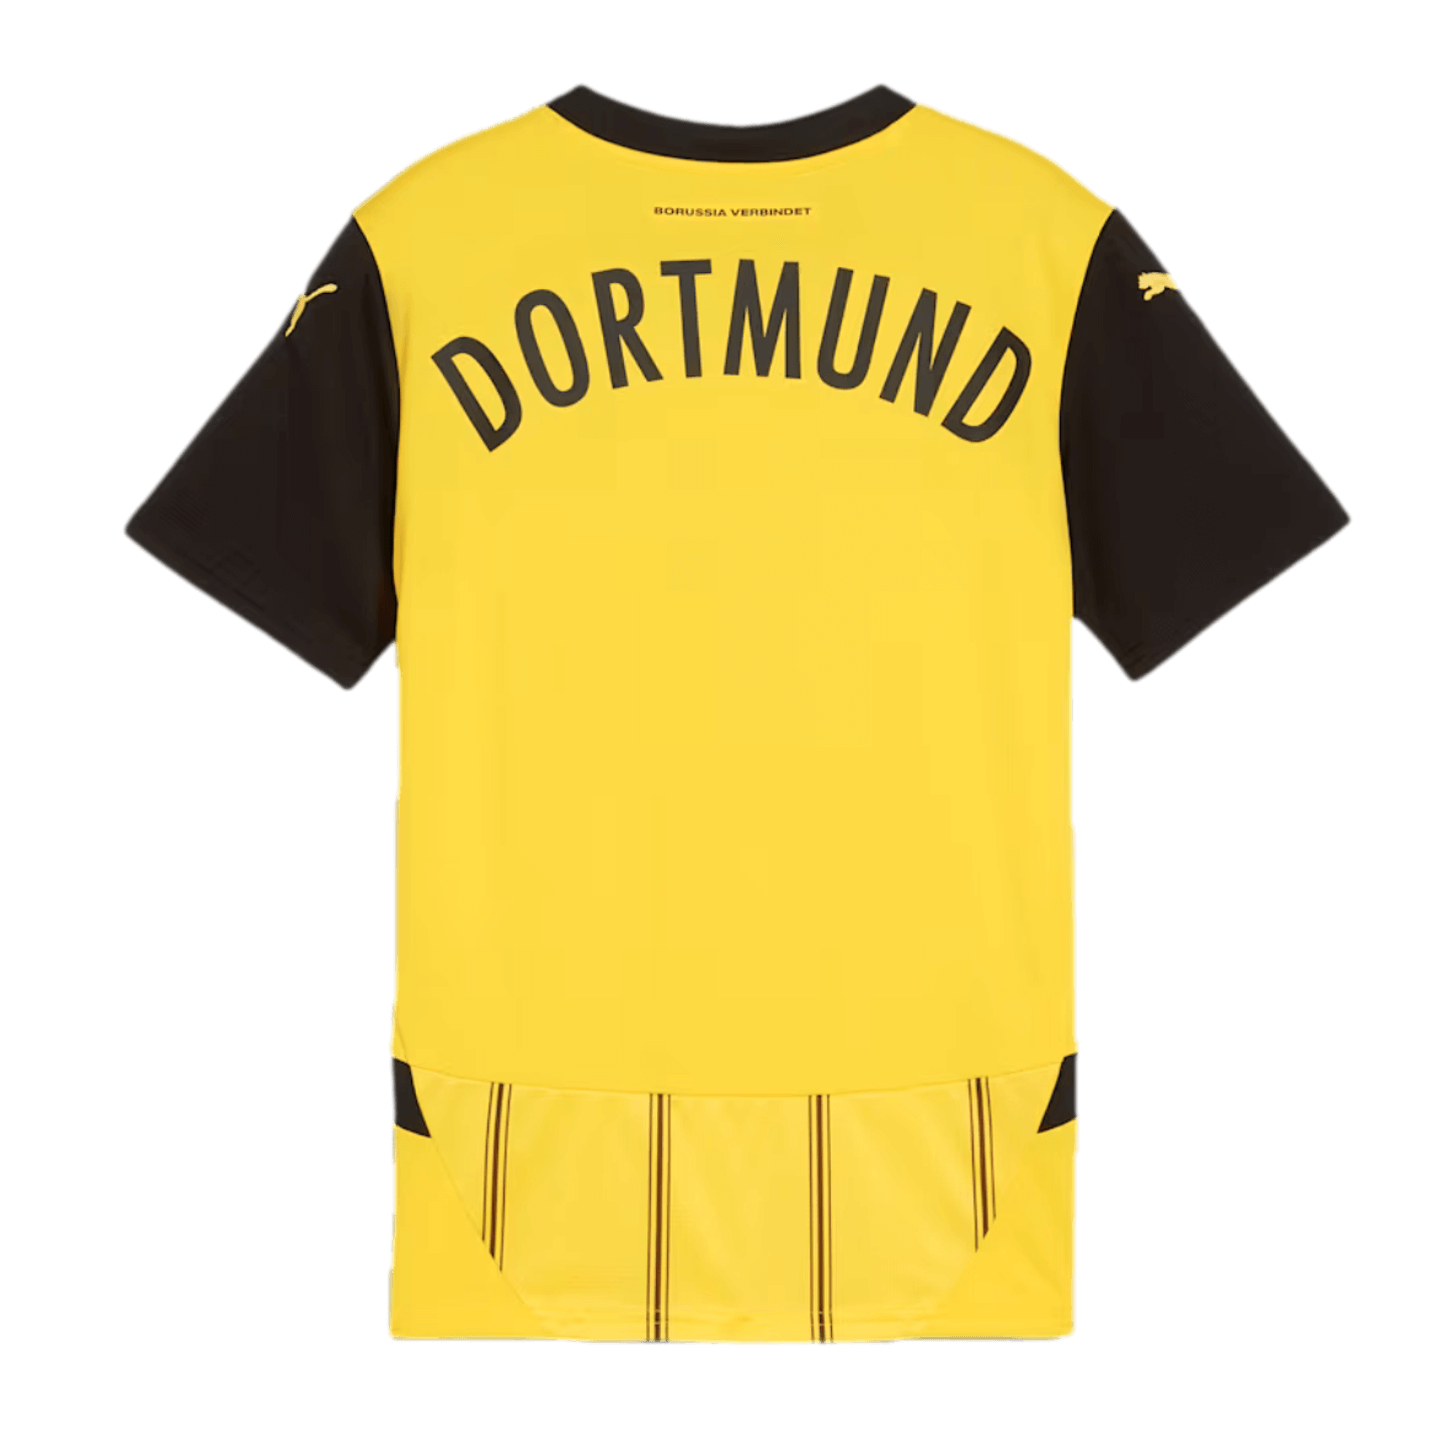 Puma Borussia Dortmund 24/25 Camiseta de local juvenil